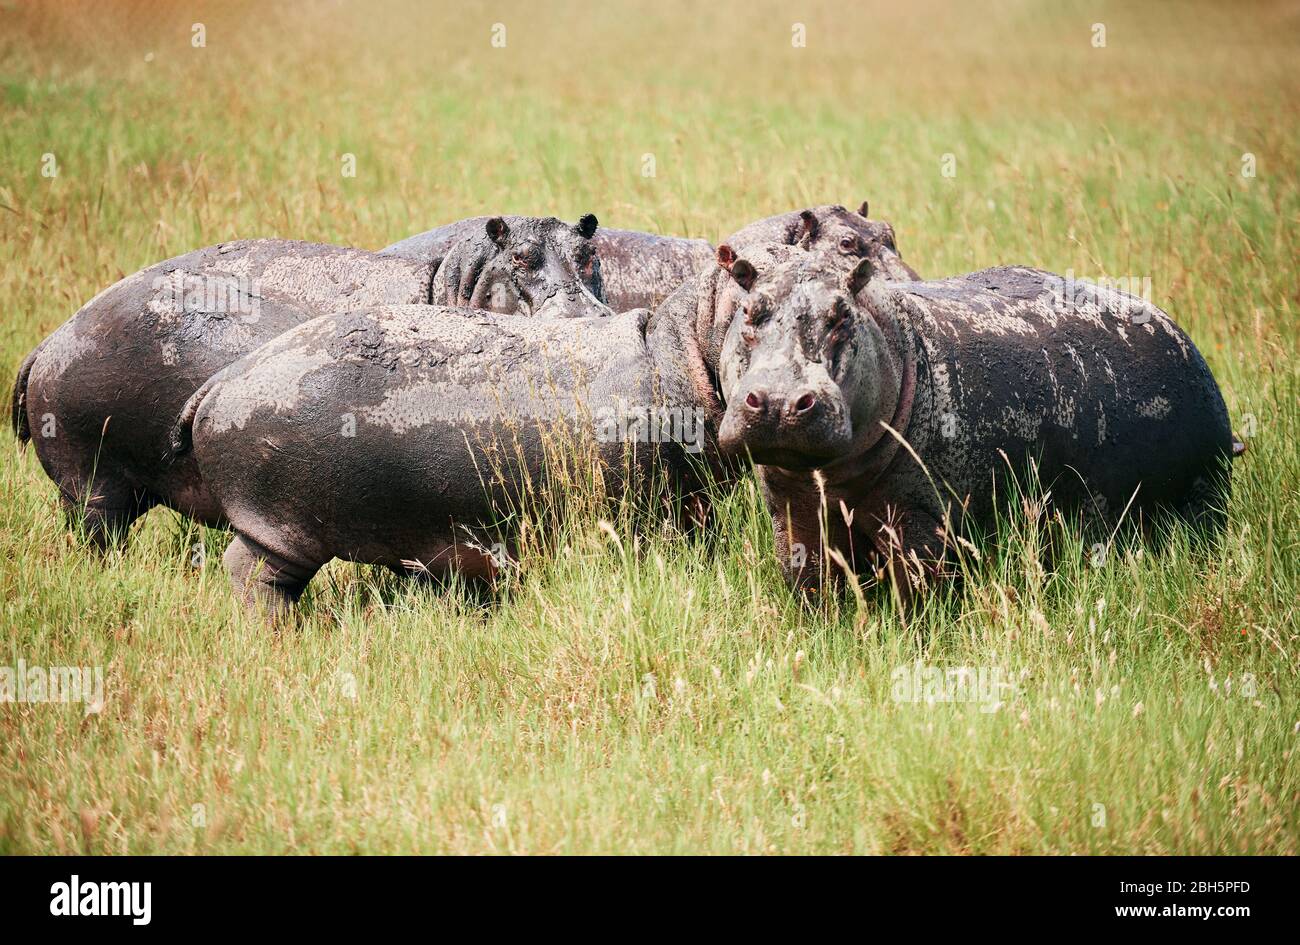 Four hippopotamuses in the grass Stock Photo